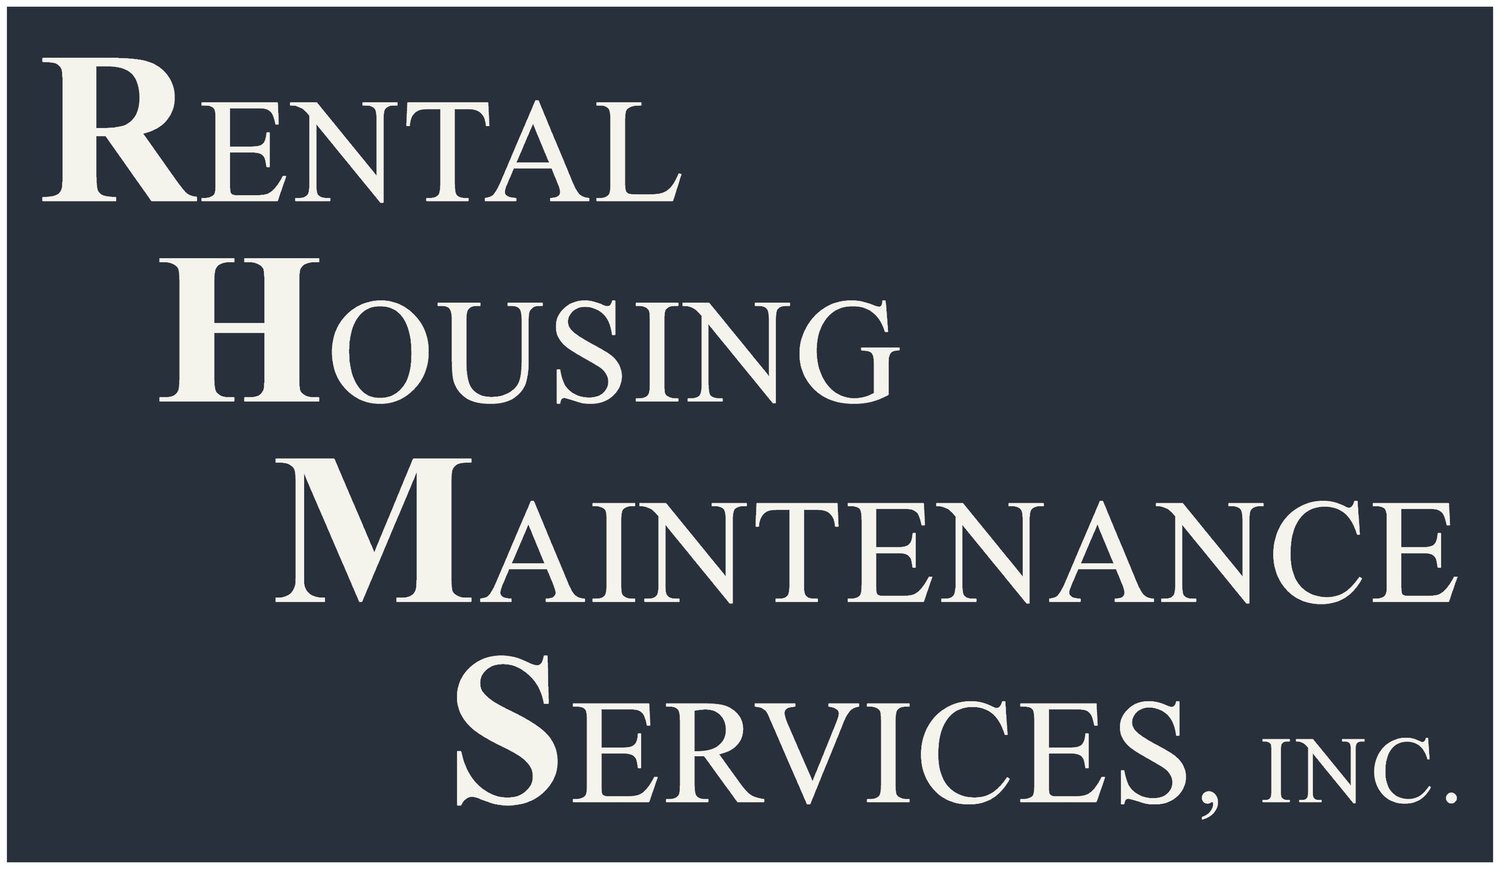 RENTAL HOUSING MAINTENANCE SERVICES